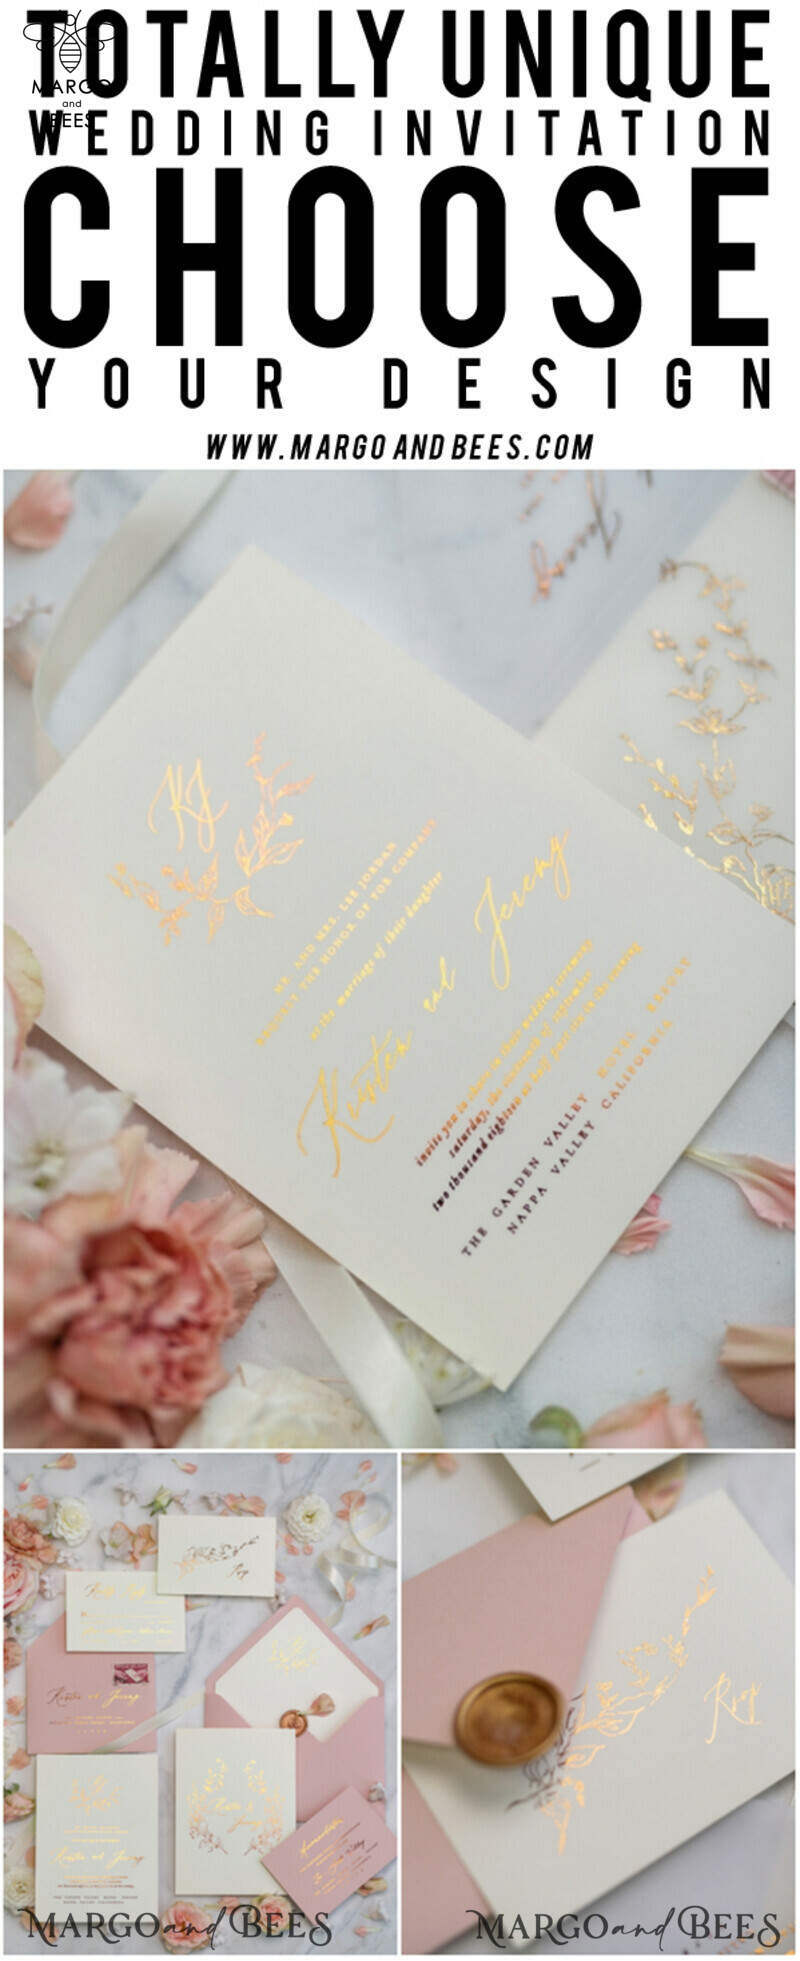 Bespoke Vellum Wedding Invitation Suite: Romantic Blush Pink and Glamour Gold Foil for an Elegant Golden Affair-43